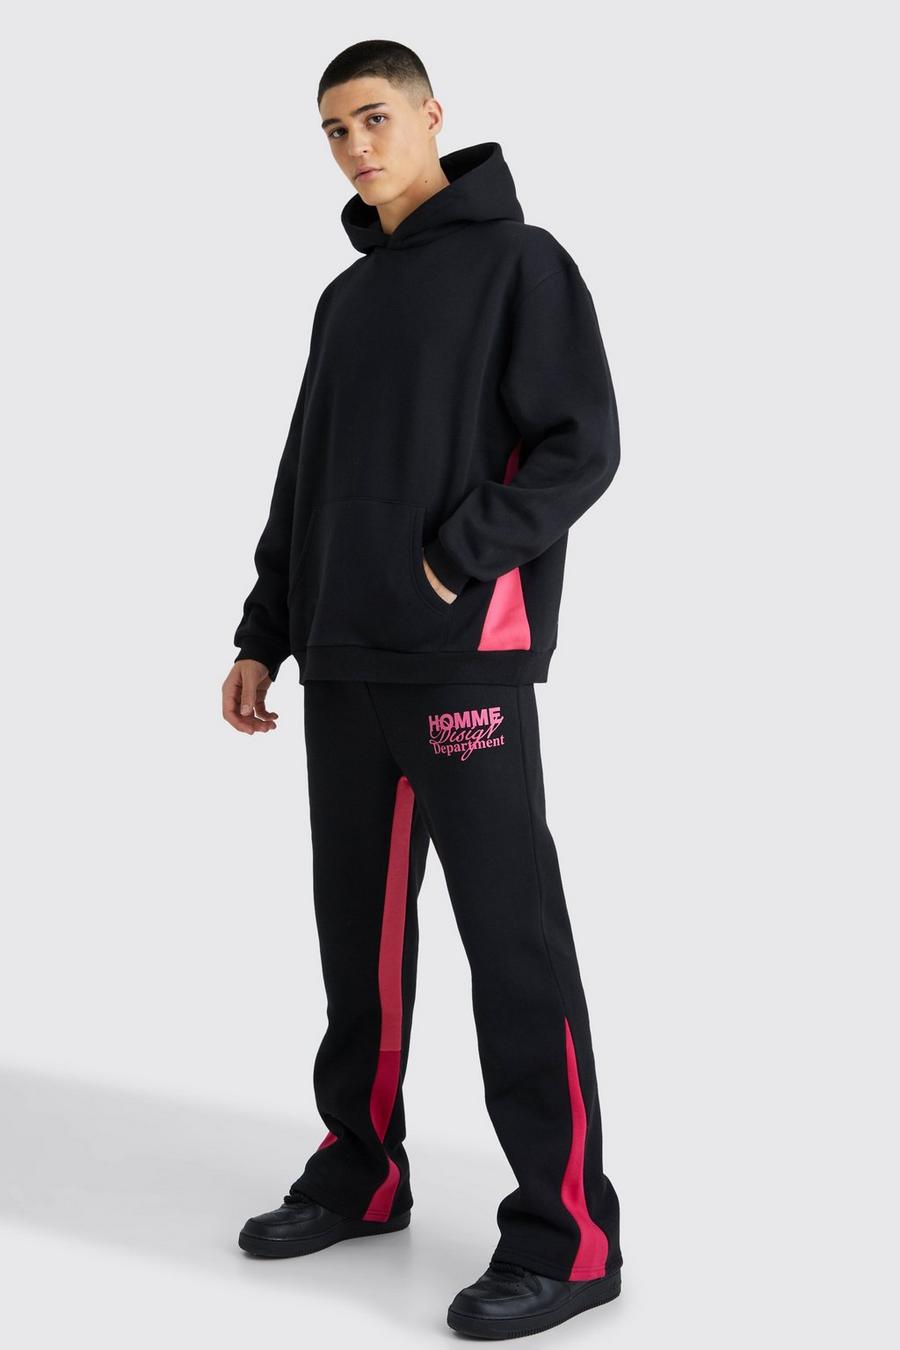 Oversize Trainingsanzug mit Homme-Print, Black